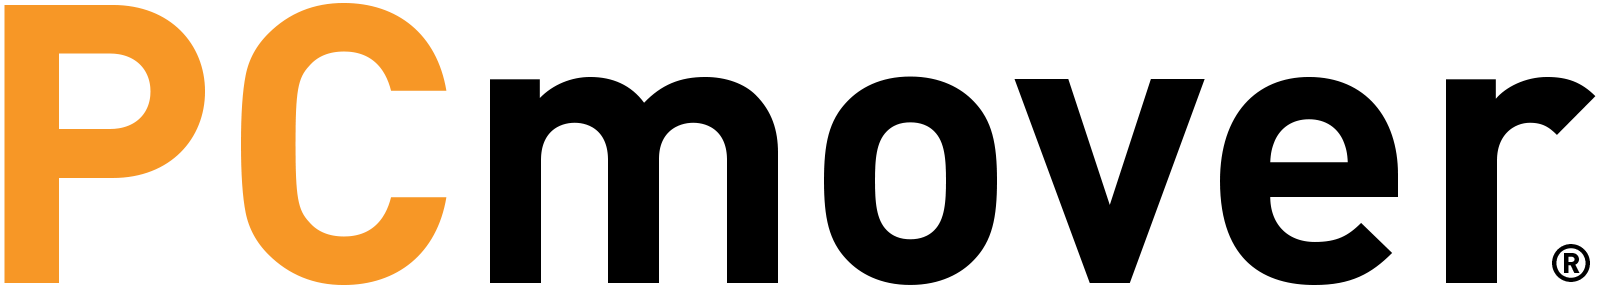 PCmover Logo